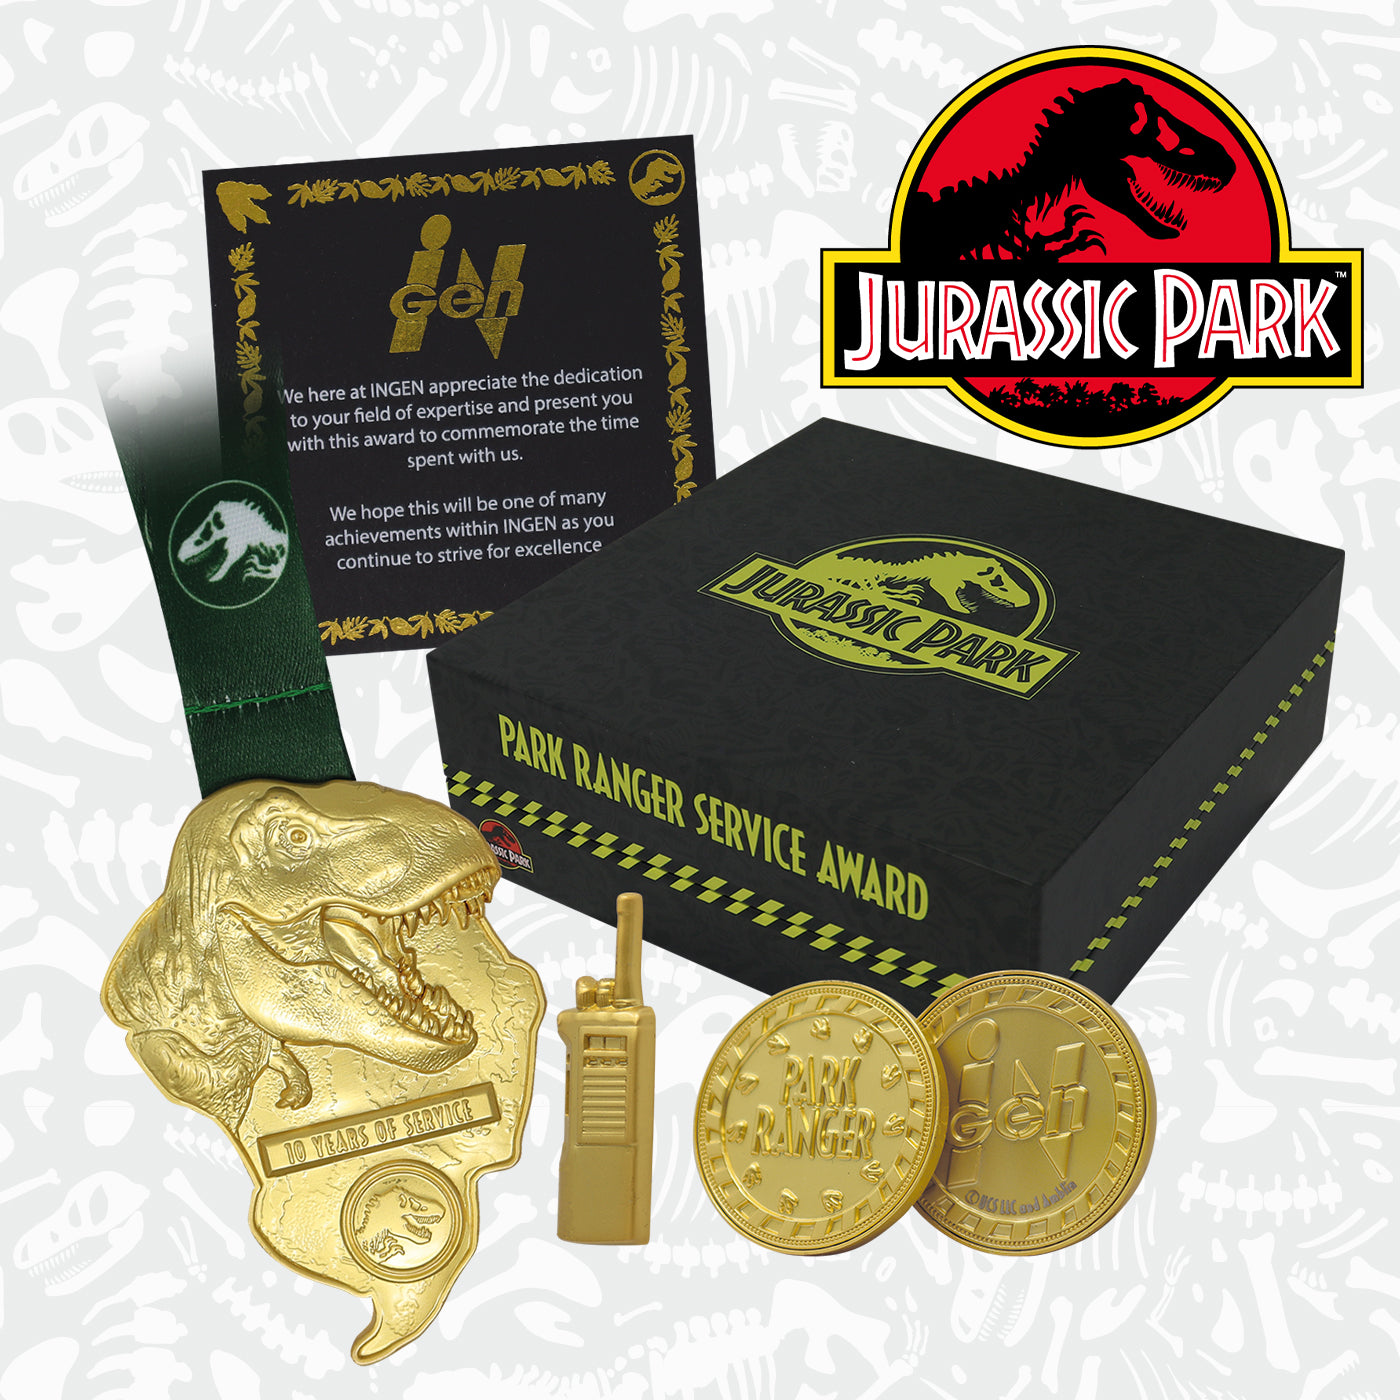 Jurassic Park 'Park Ranger Service Award'